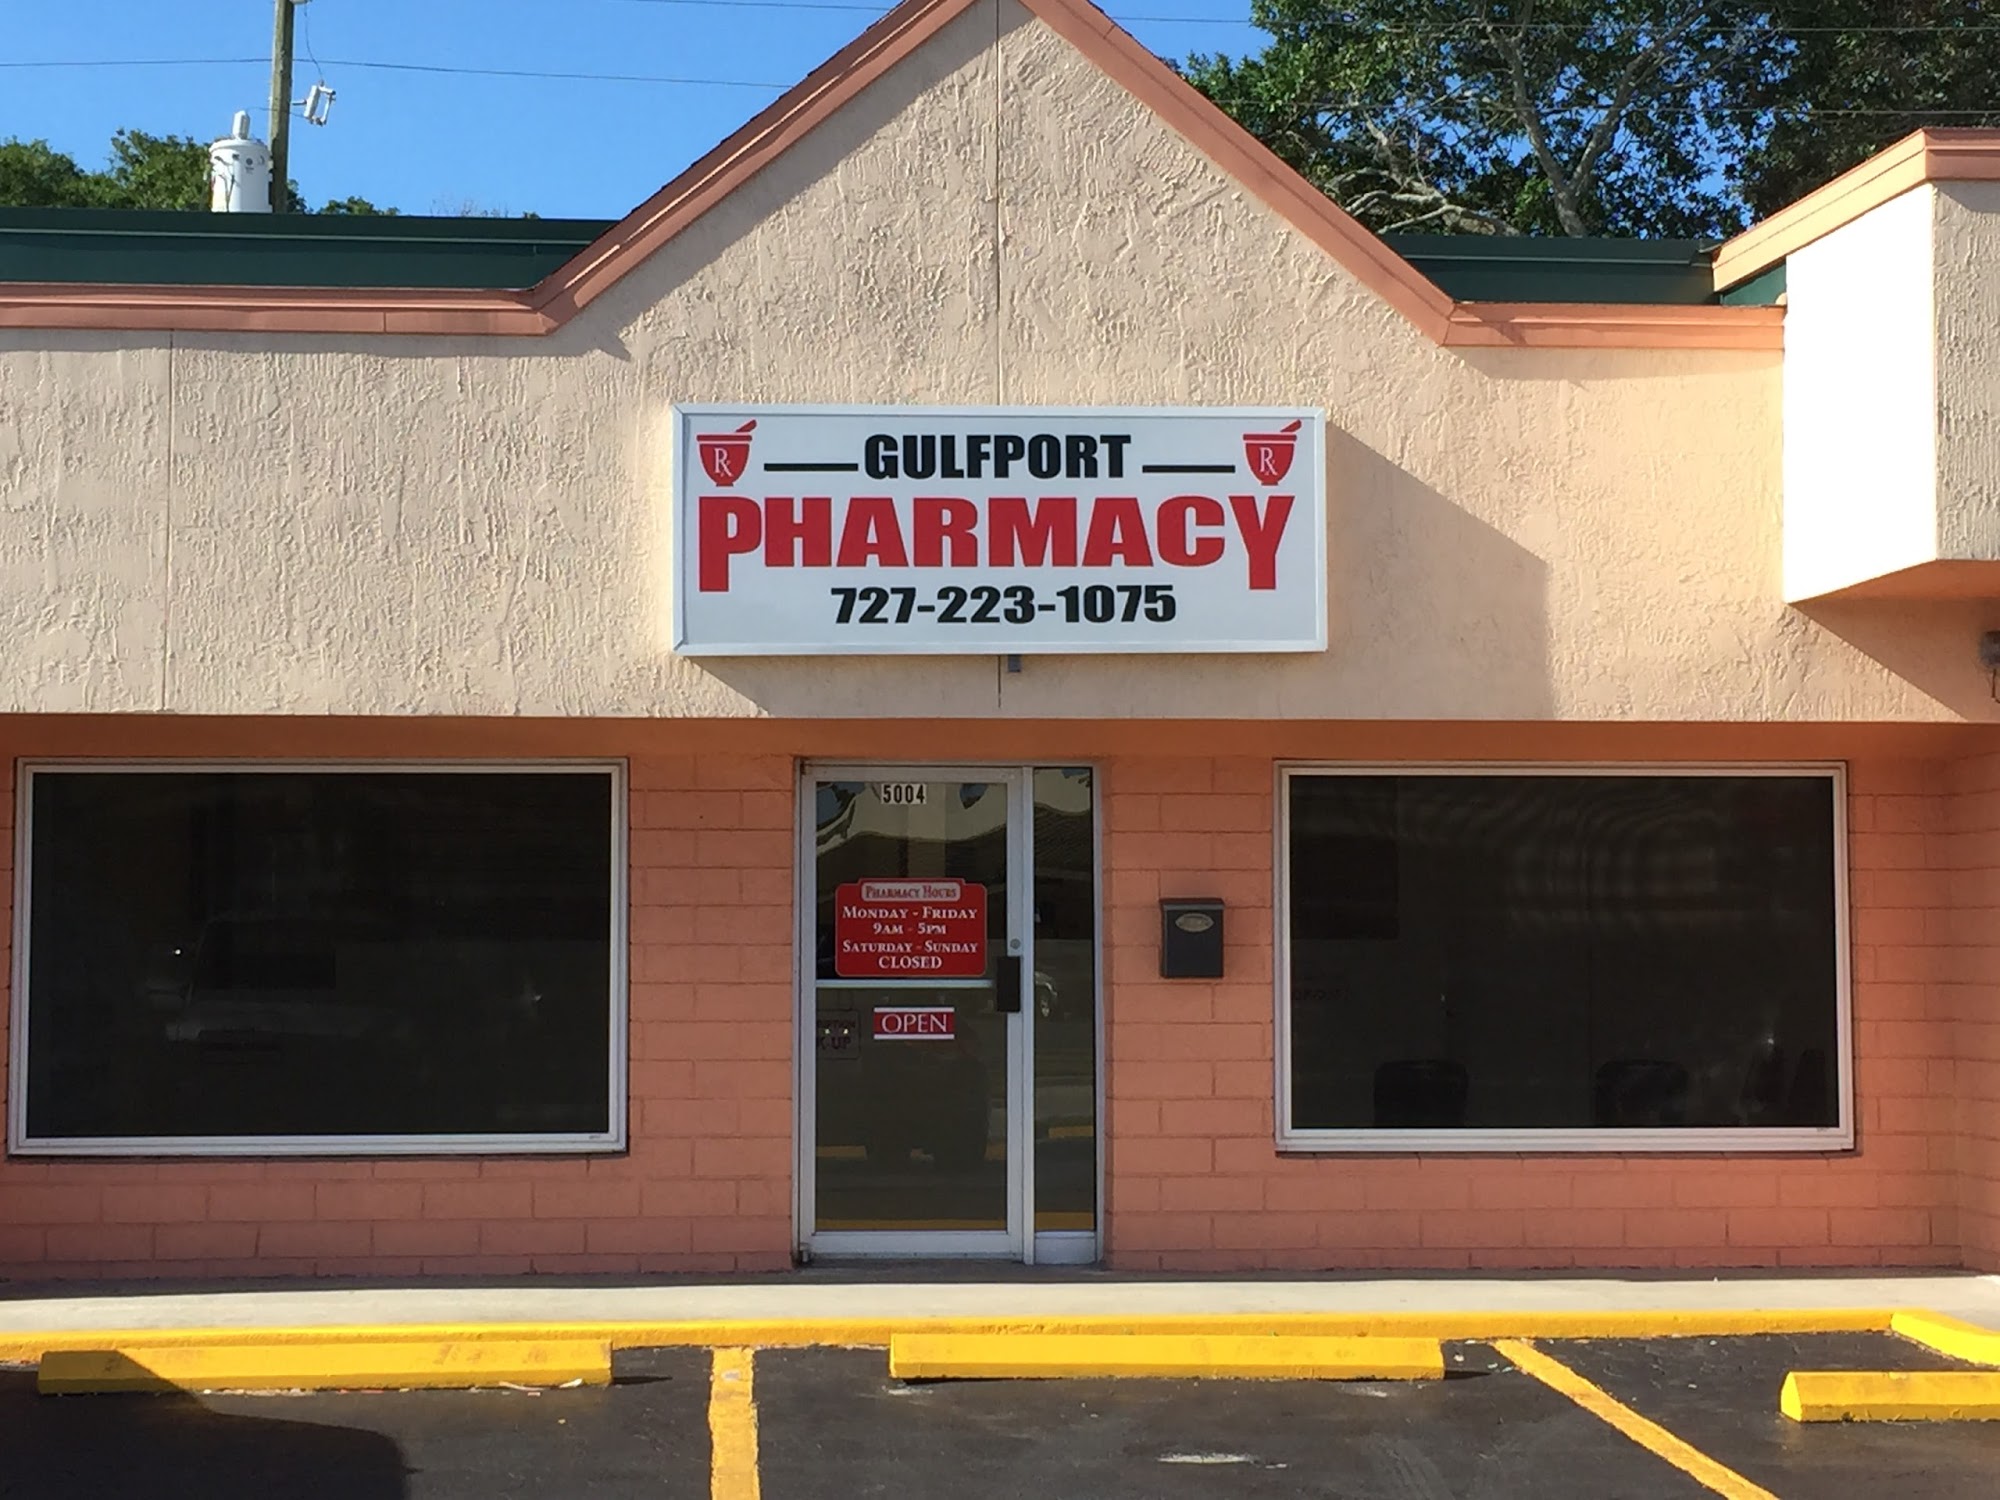 Gulfport Pharmacy